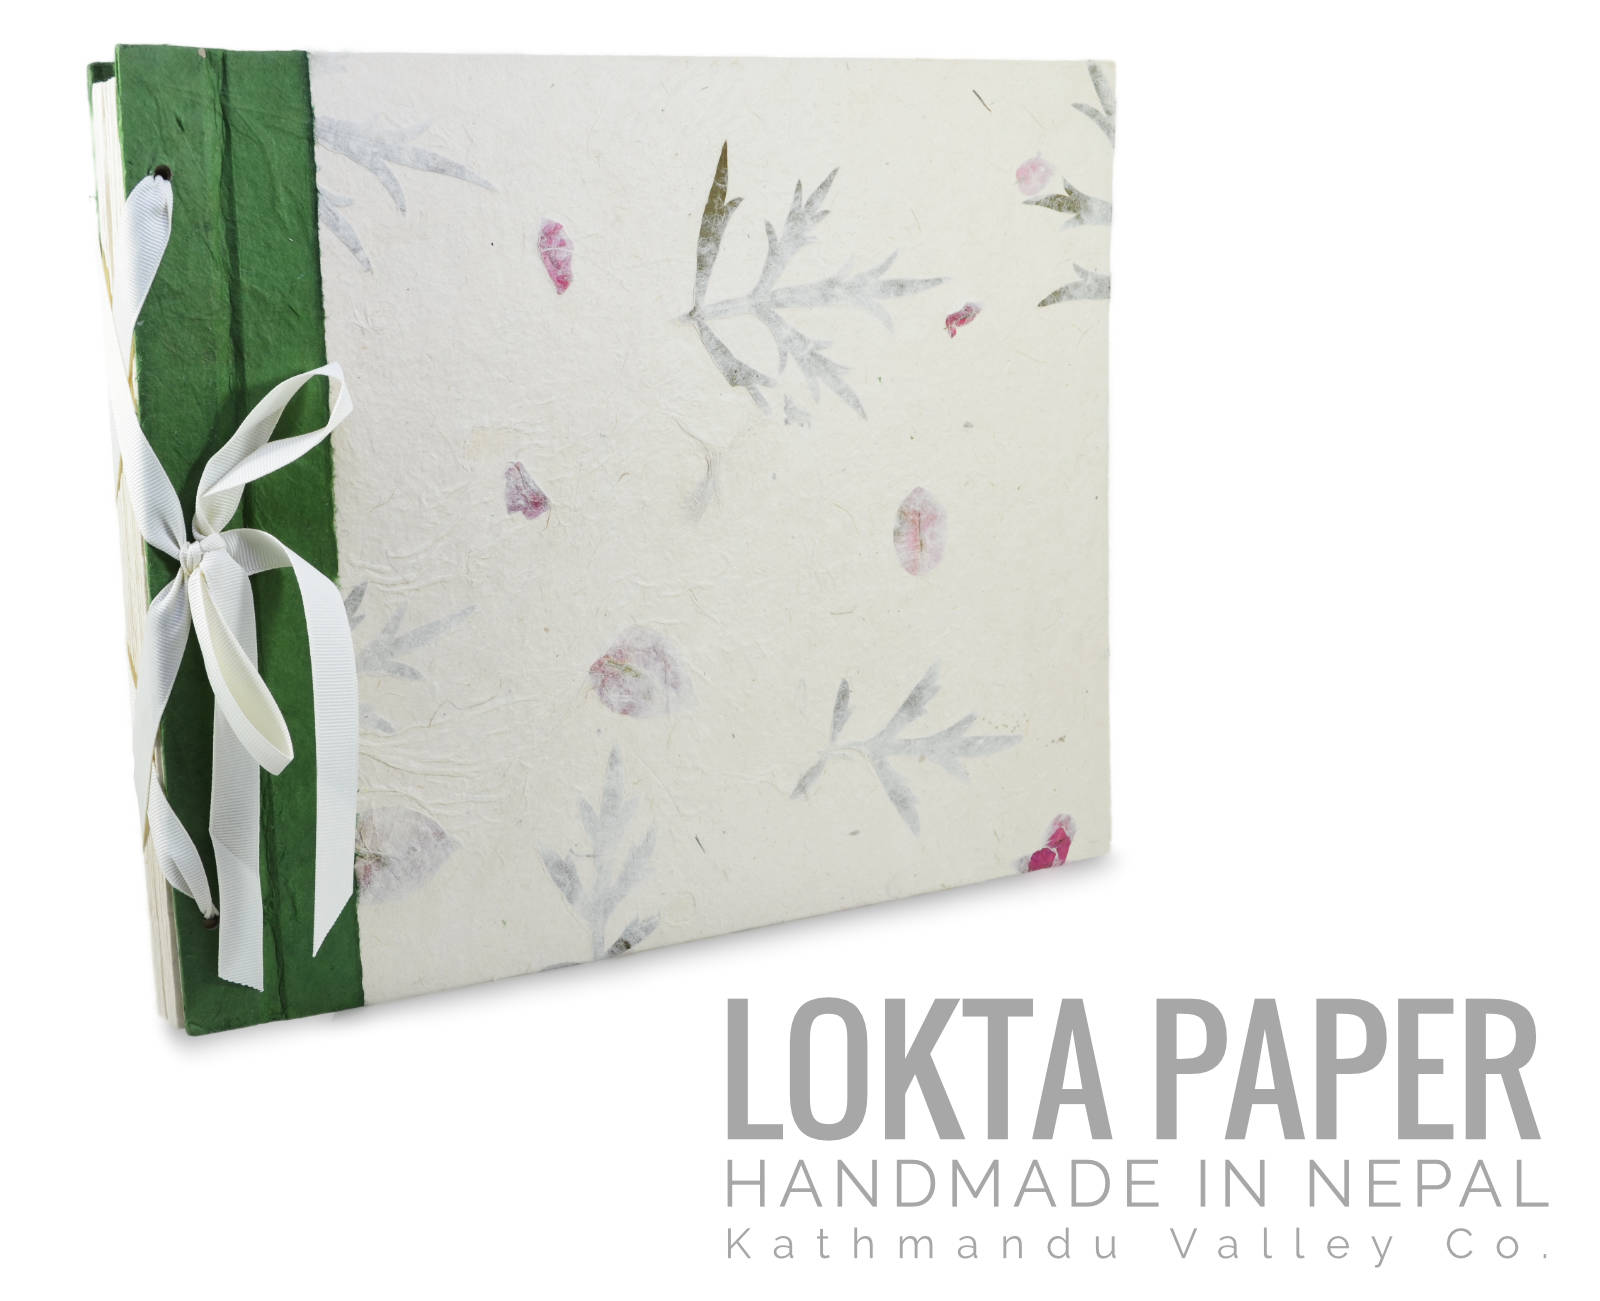 Handmade Lokta paper scrapbook with natural petals